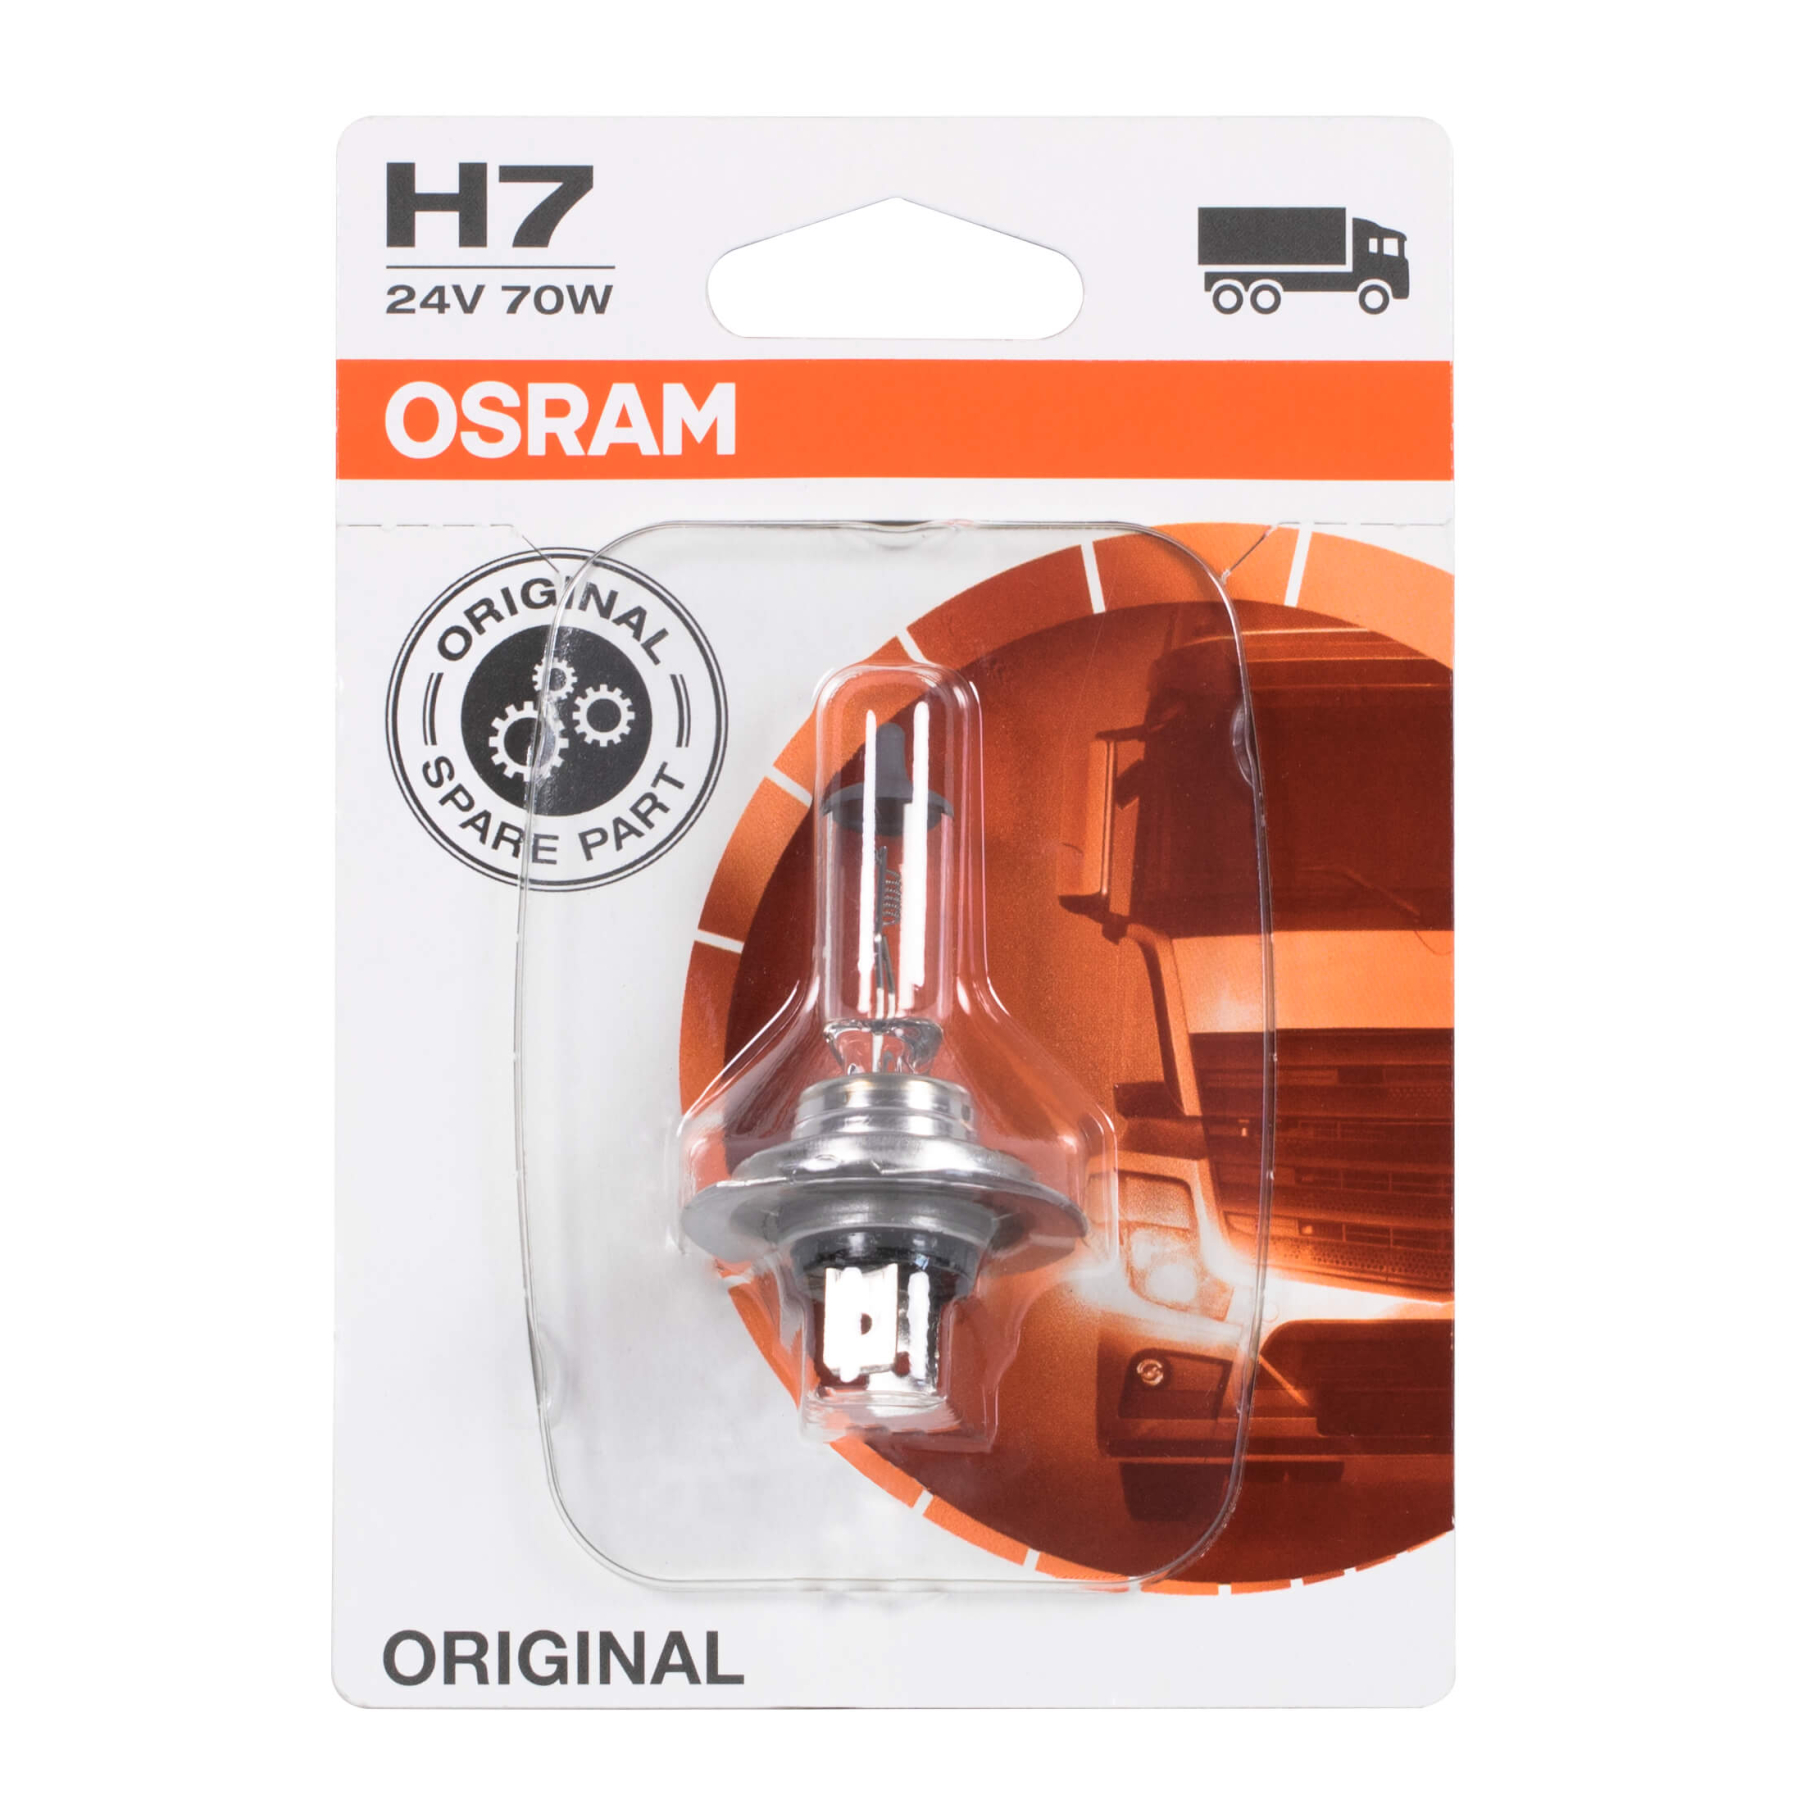 H7 24V Osram Original Line truck headlight bulbs, 9,08 €